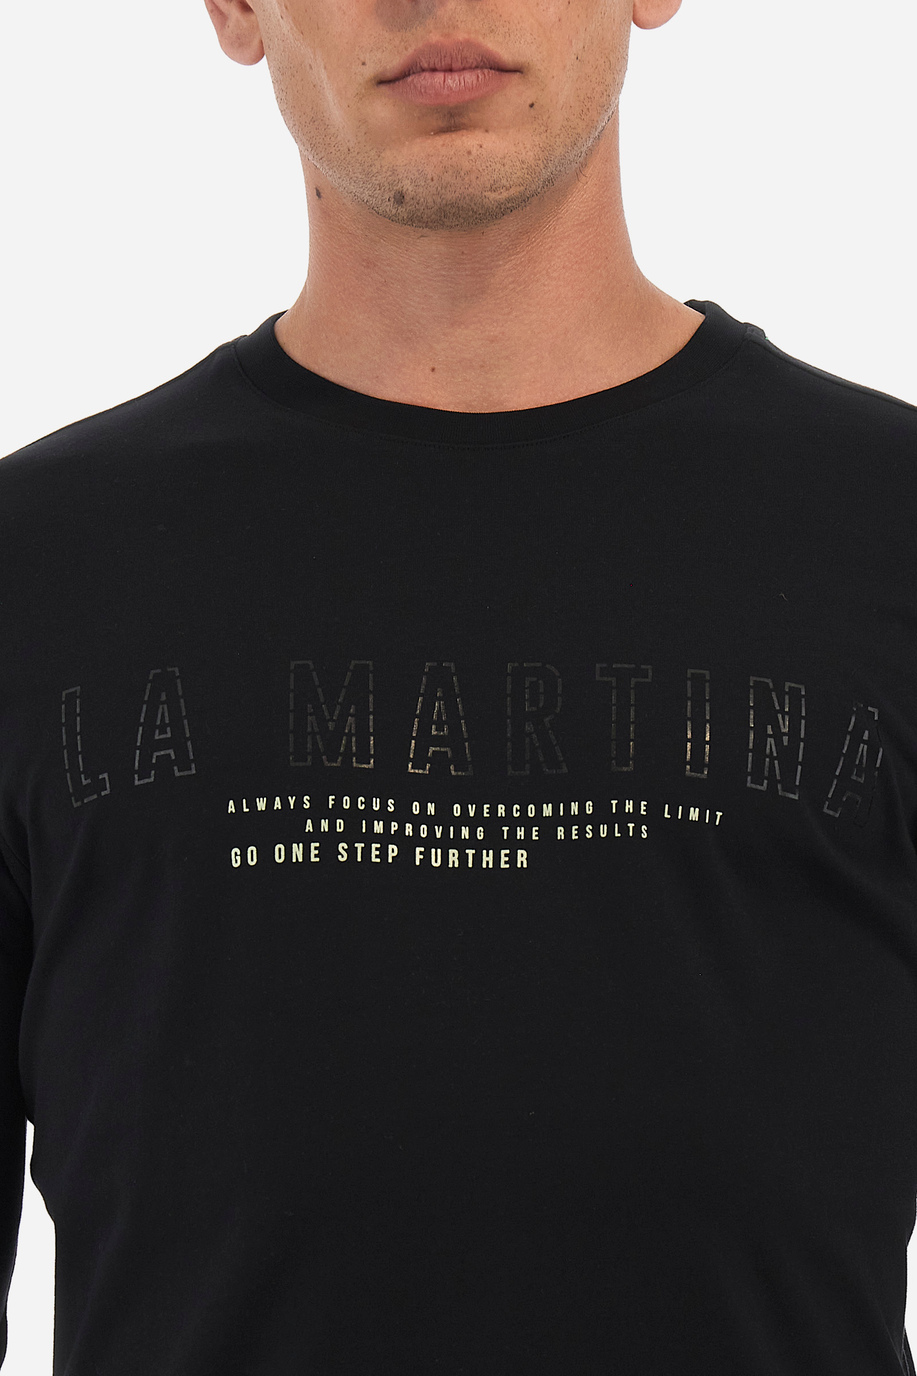 Men's T-shirts in a regular fit - Willmer - T-Shirts | La Martina - Official Online Shop